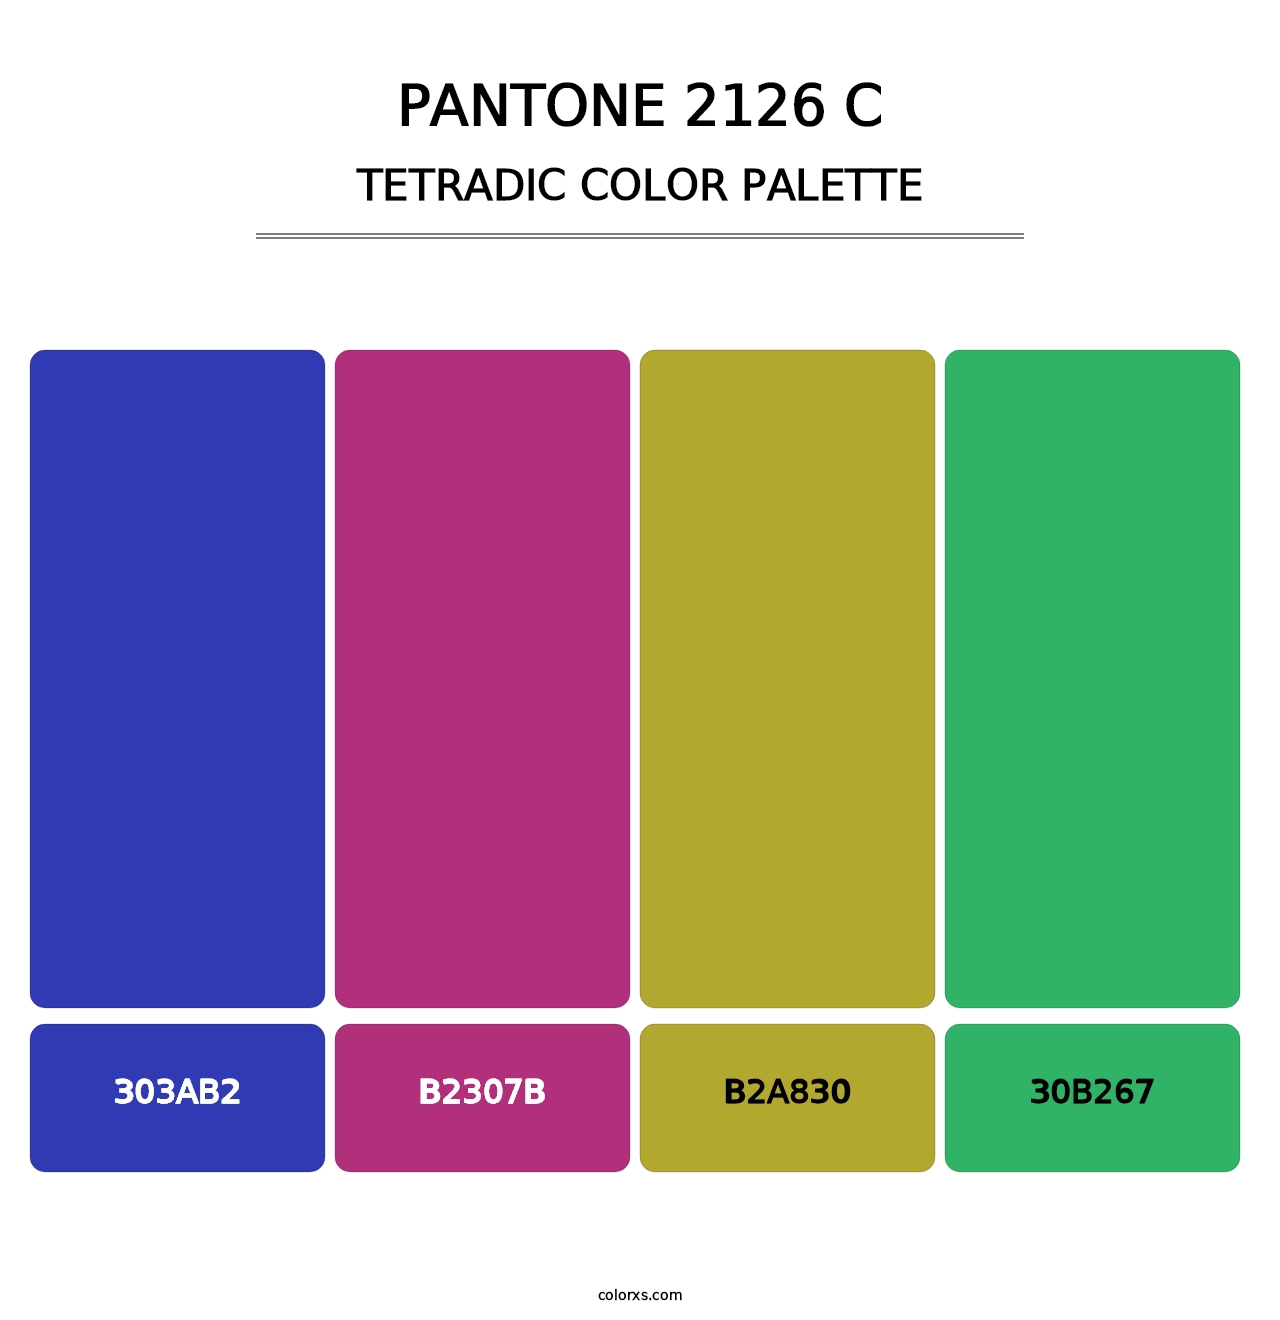 PANTONE 2126 C - Tetradic Color Palette